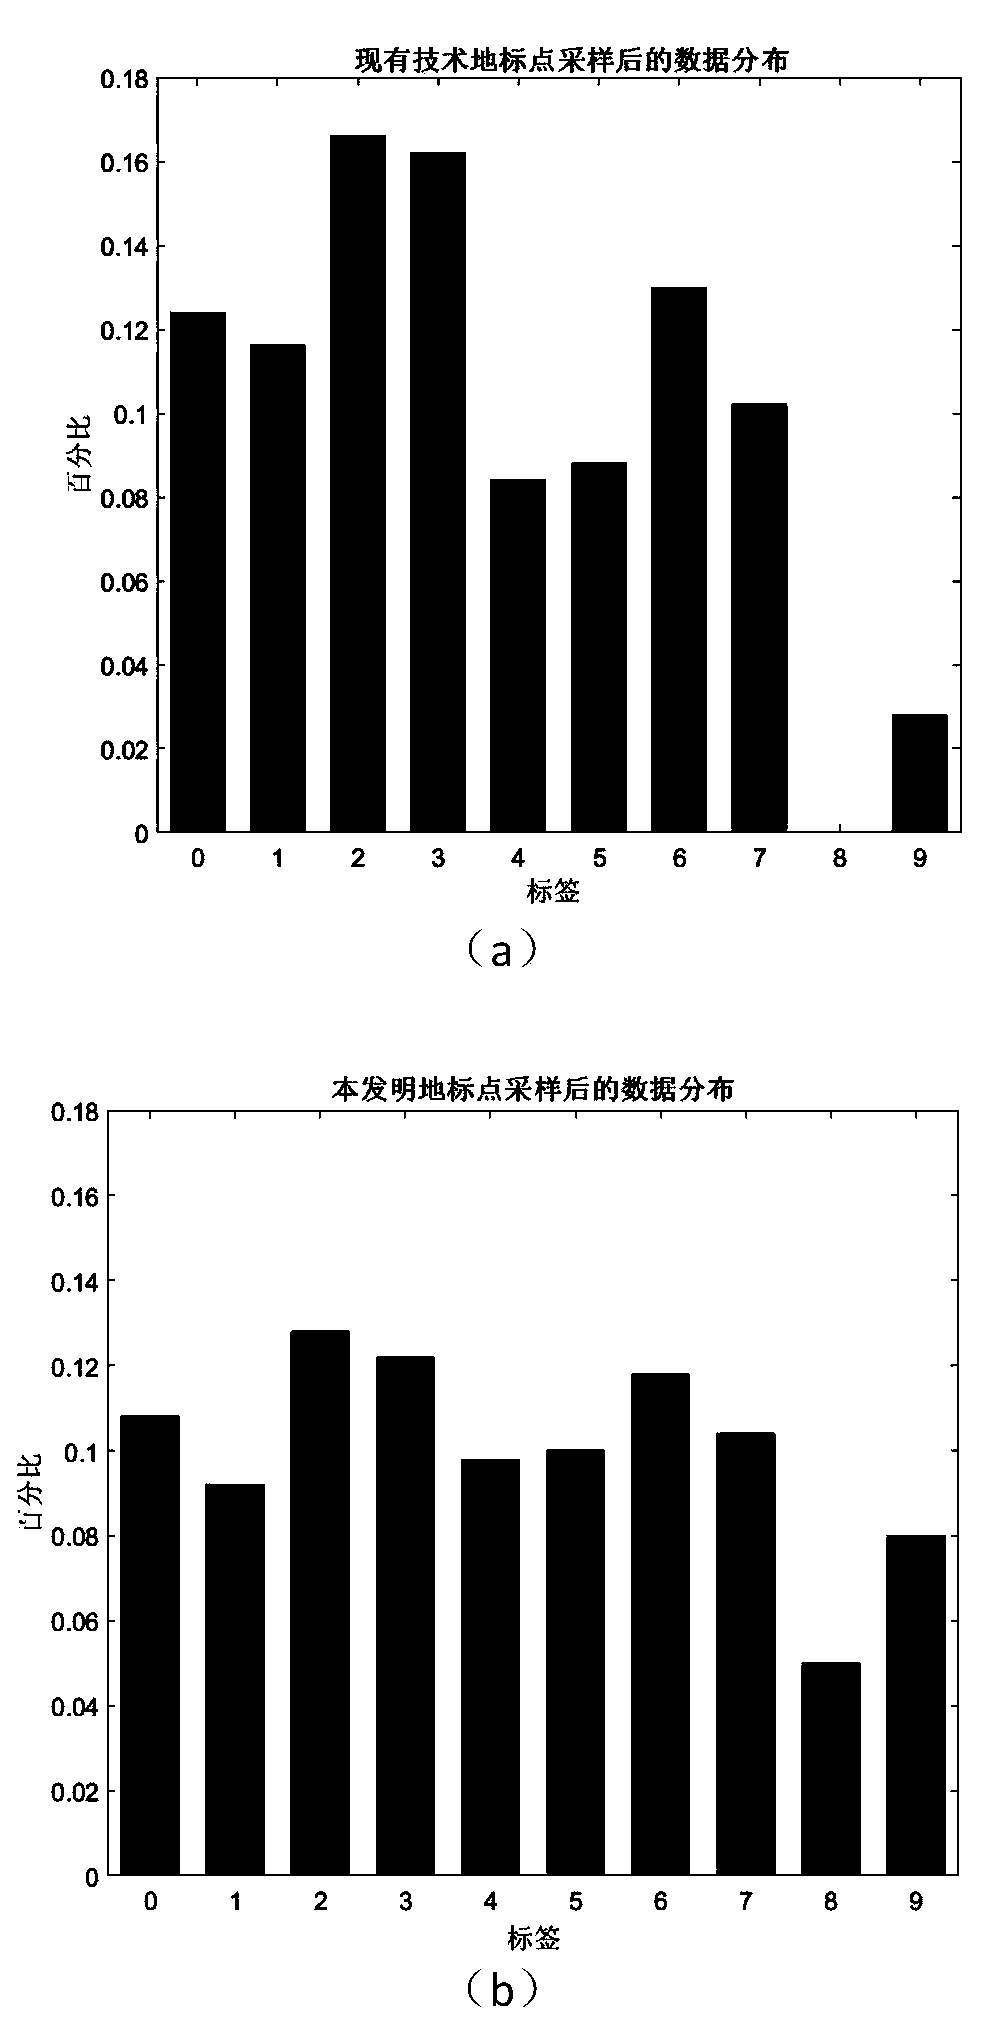 Image spectral clustering method based on fast selection of landmark points